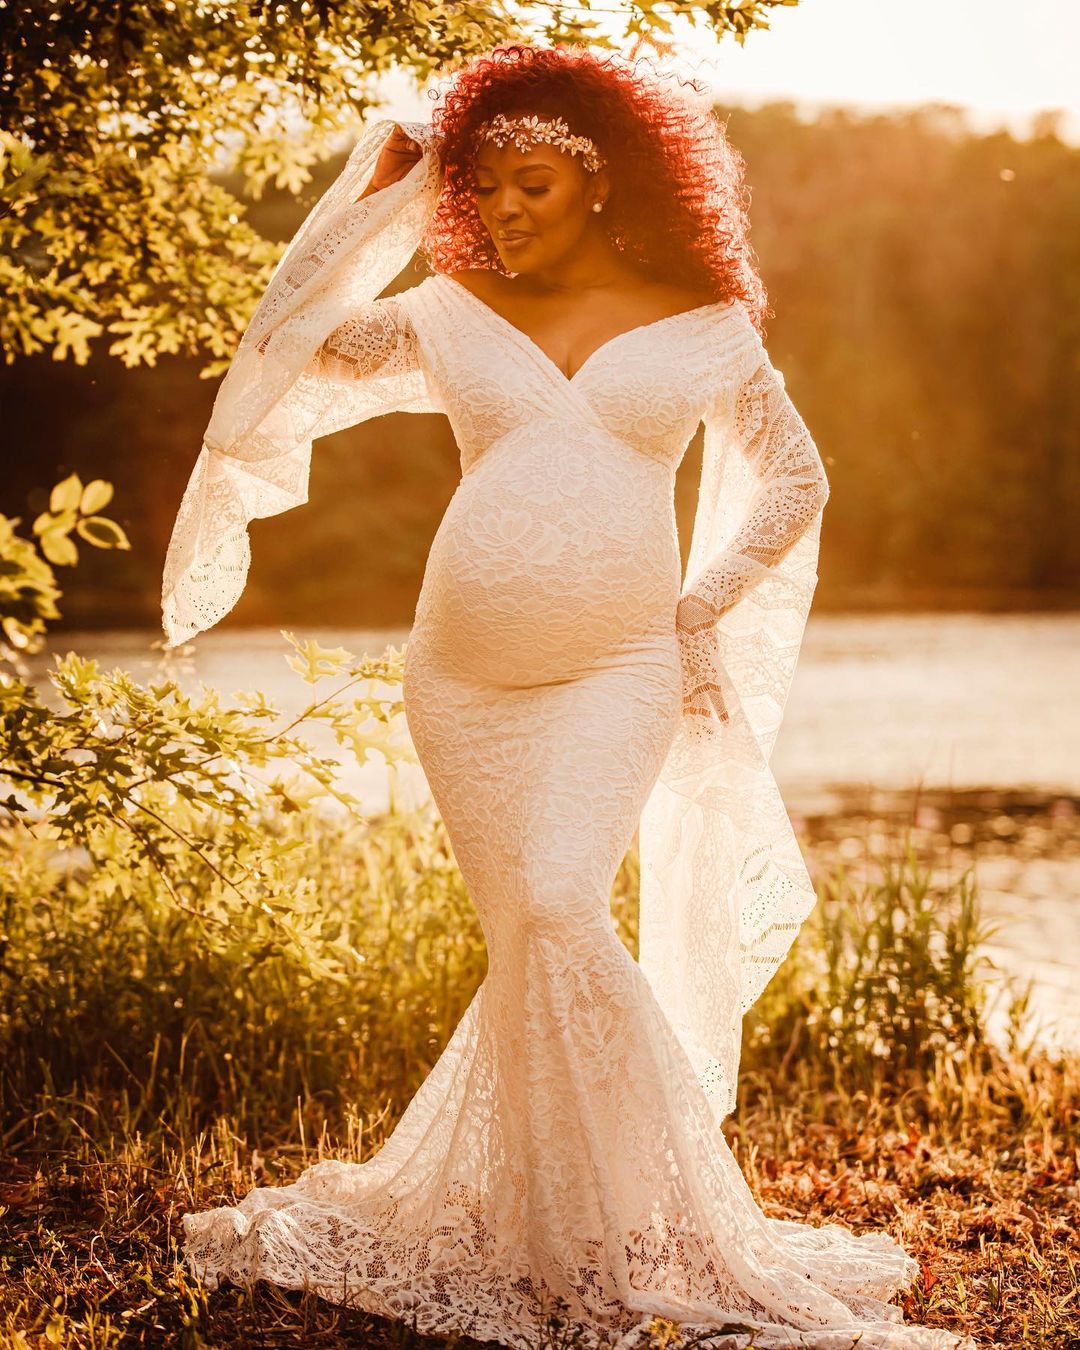 Photo courtesy: Kambua showing off her pregnancy on Instagram